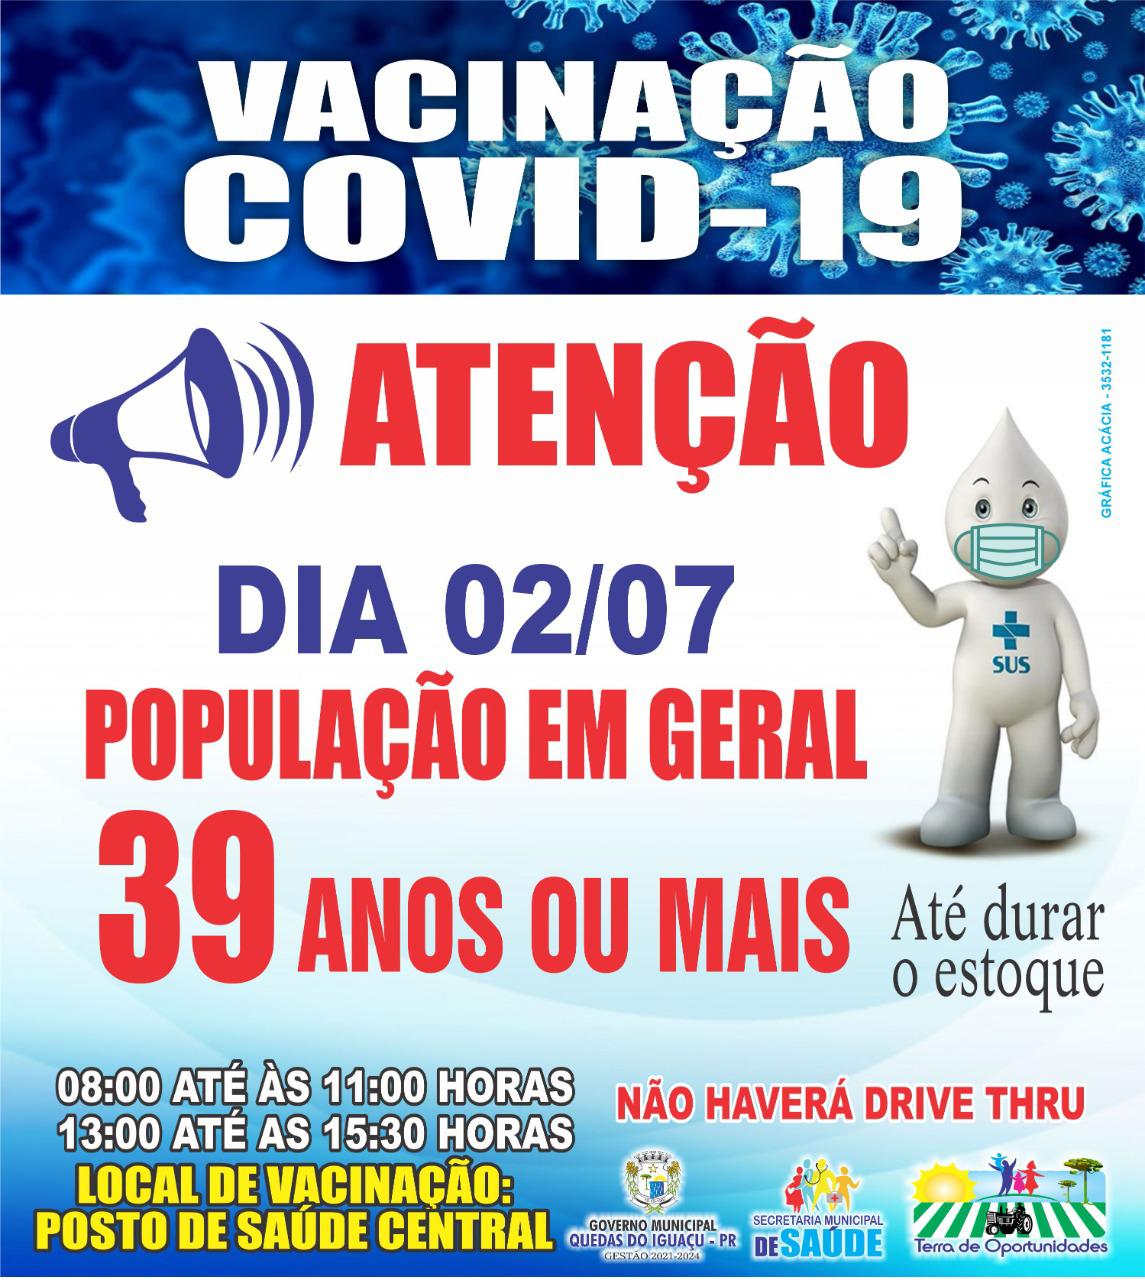 Img 20210702 Wa0019 1 - Jornal Expoente Do Iguaçu